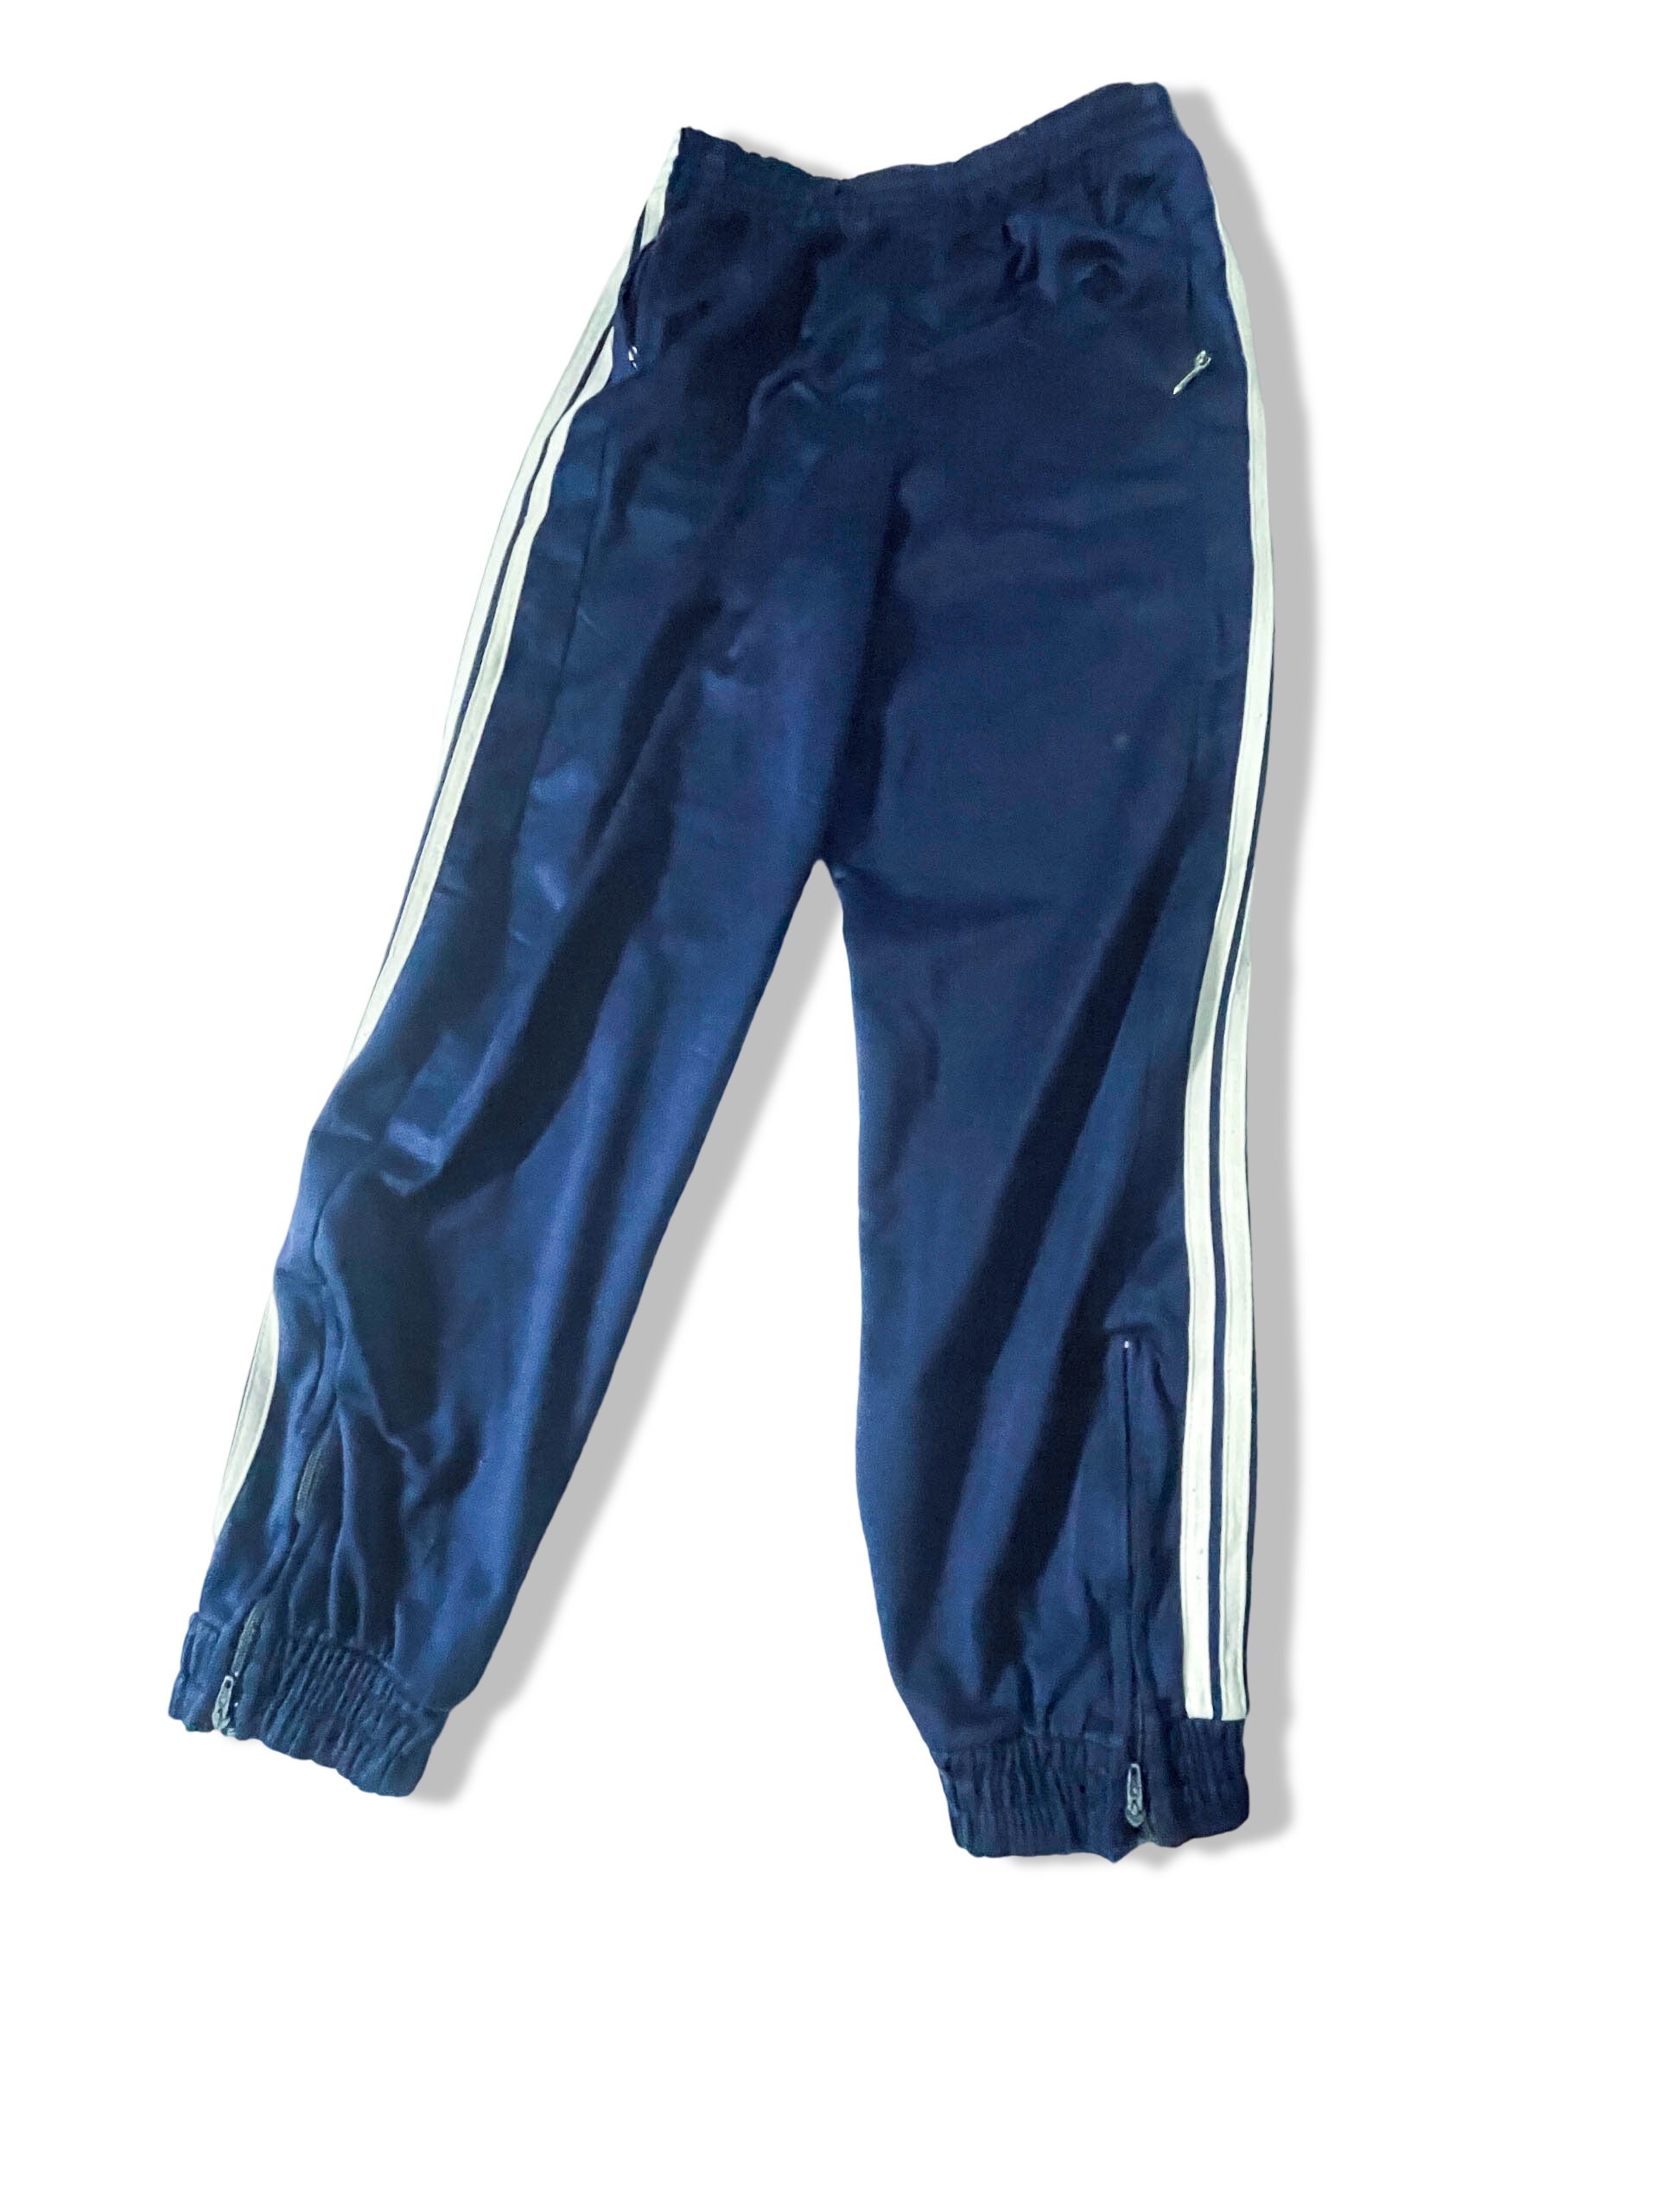 Vintage Men's Adidas Original classic fit blue 3-stripe jogger pant in XS|L22W22|SKU 3897